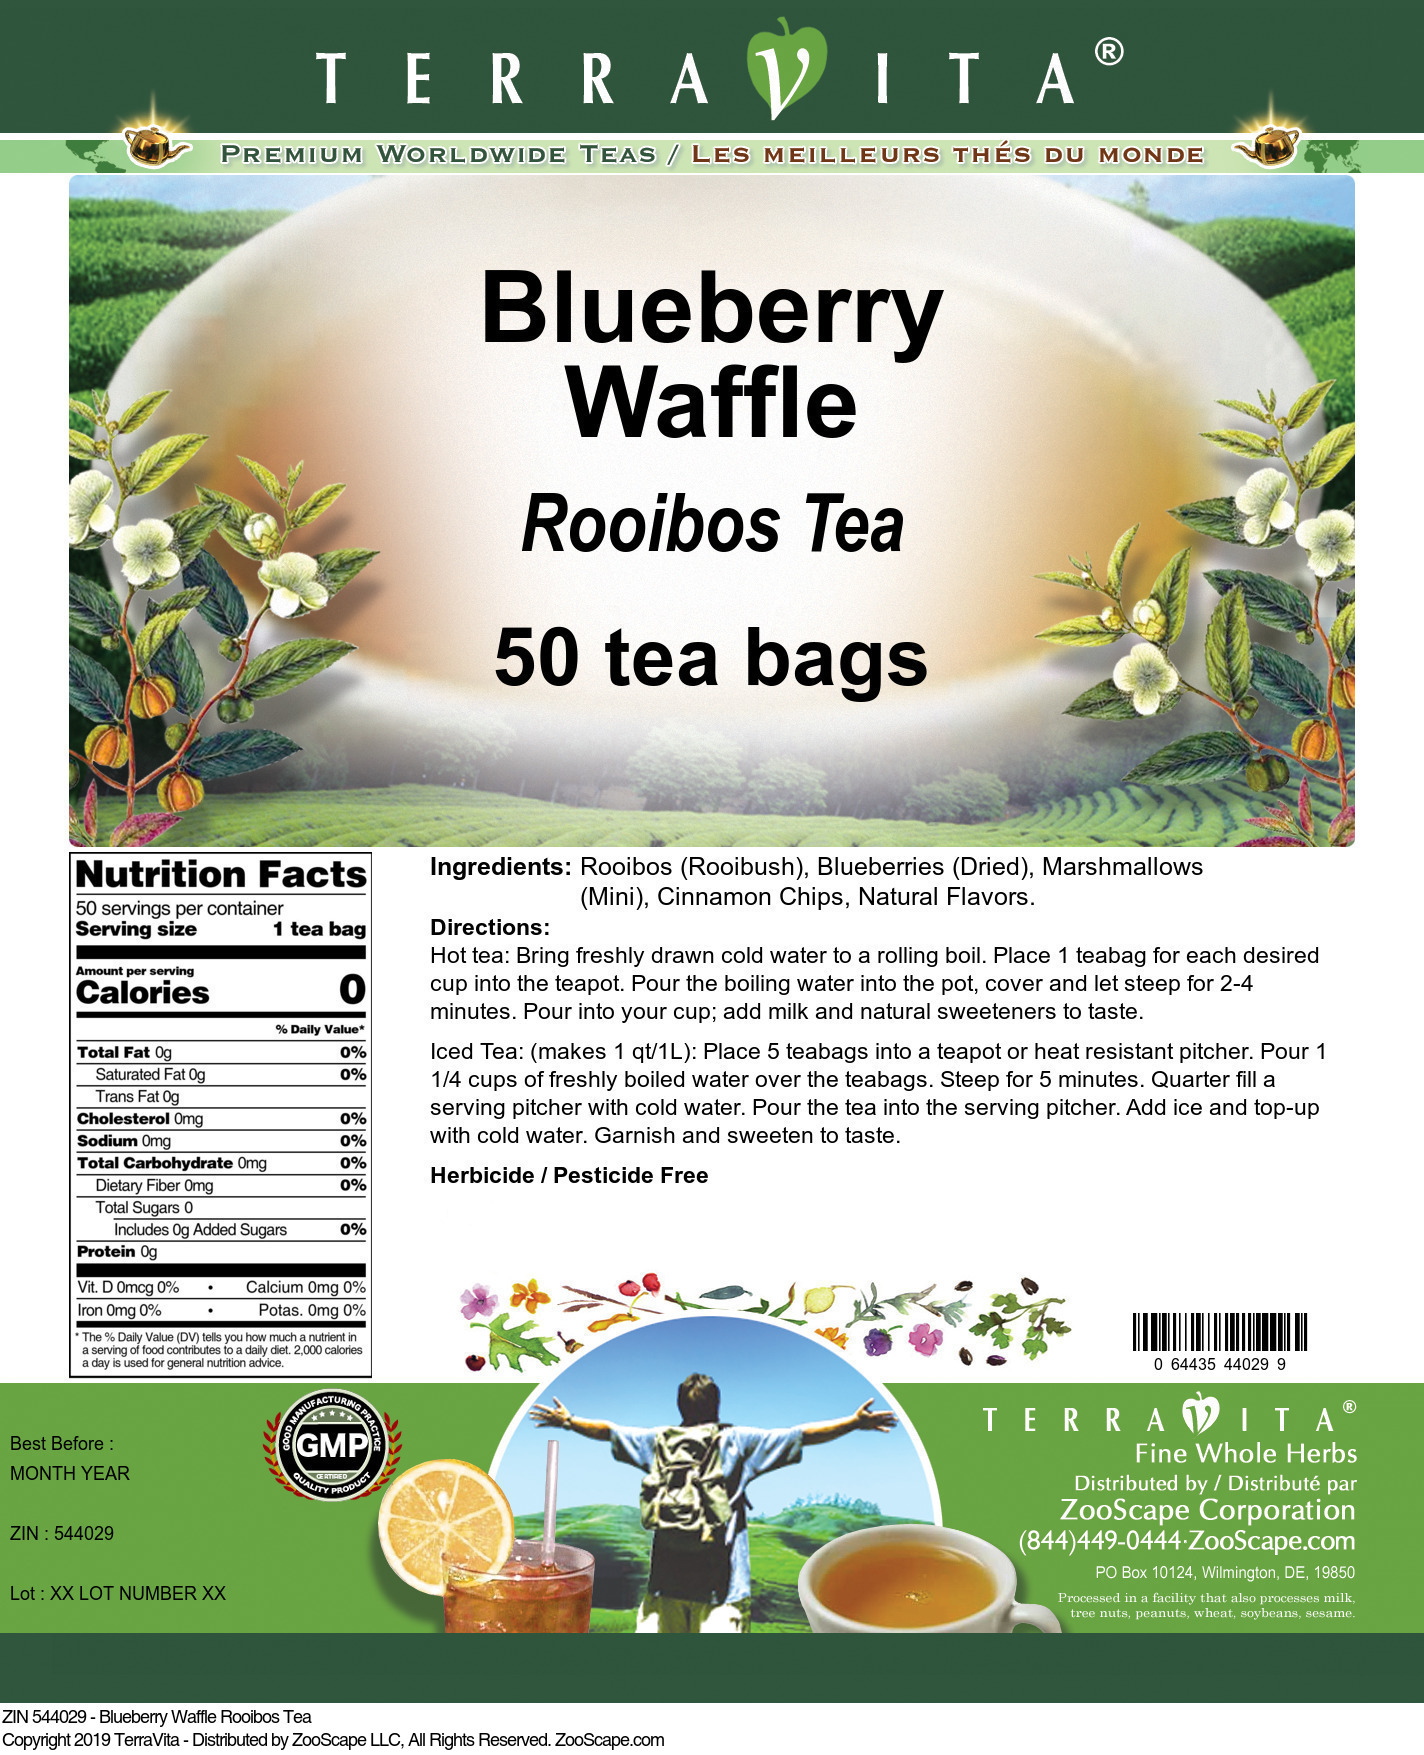 Blueberry Waffle Rooibos Tea - Label